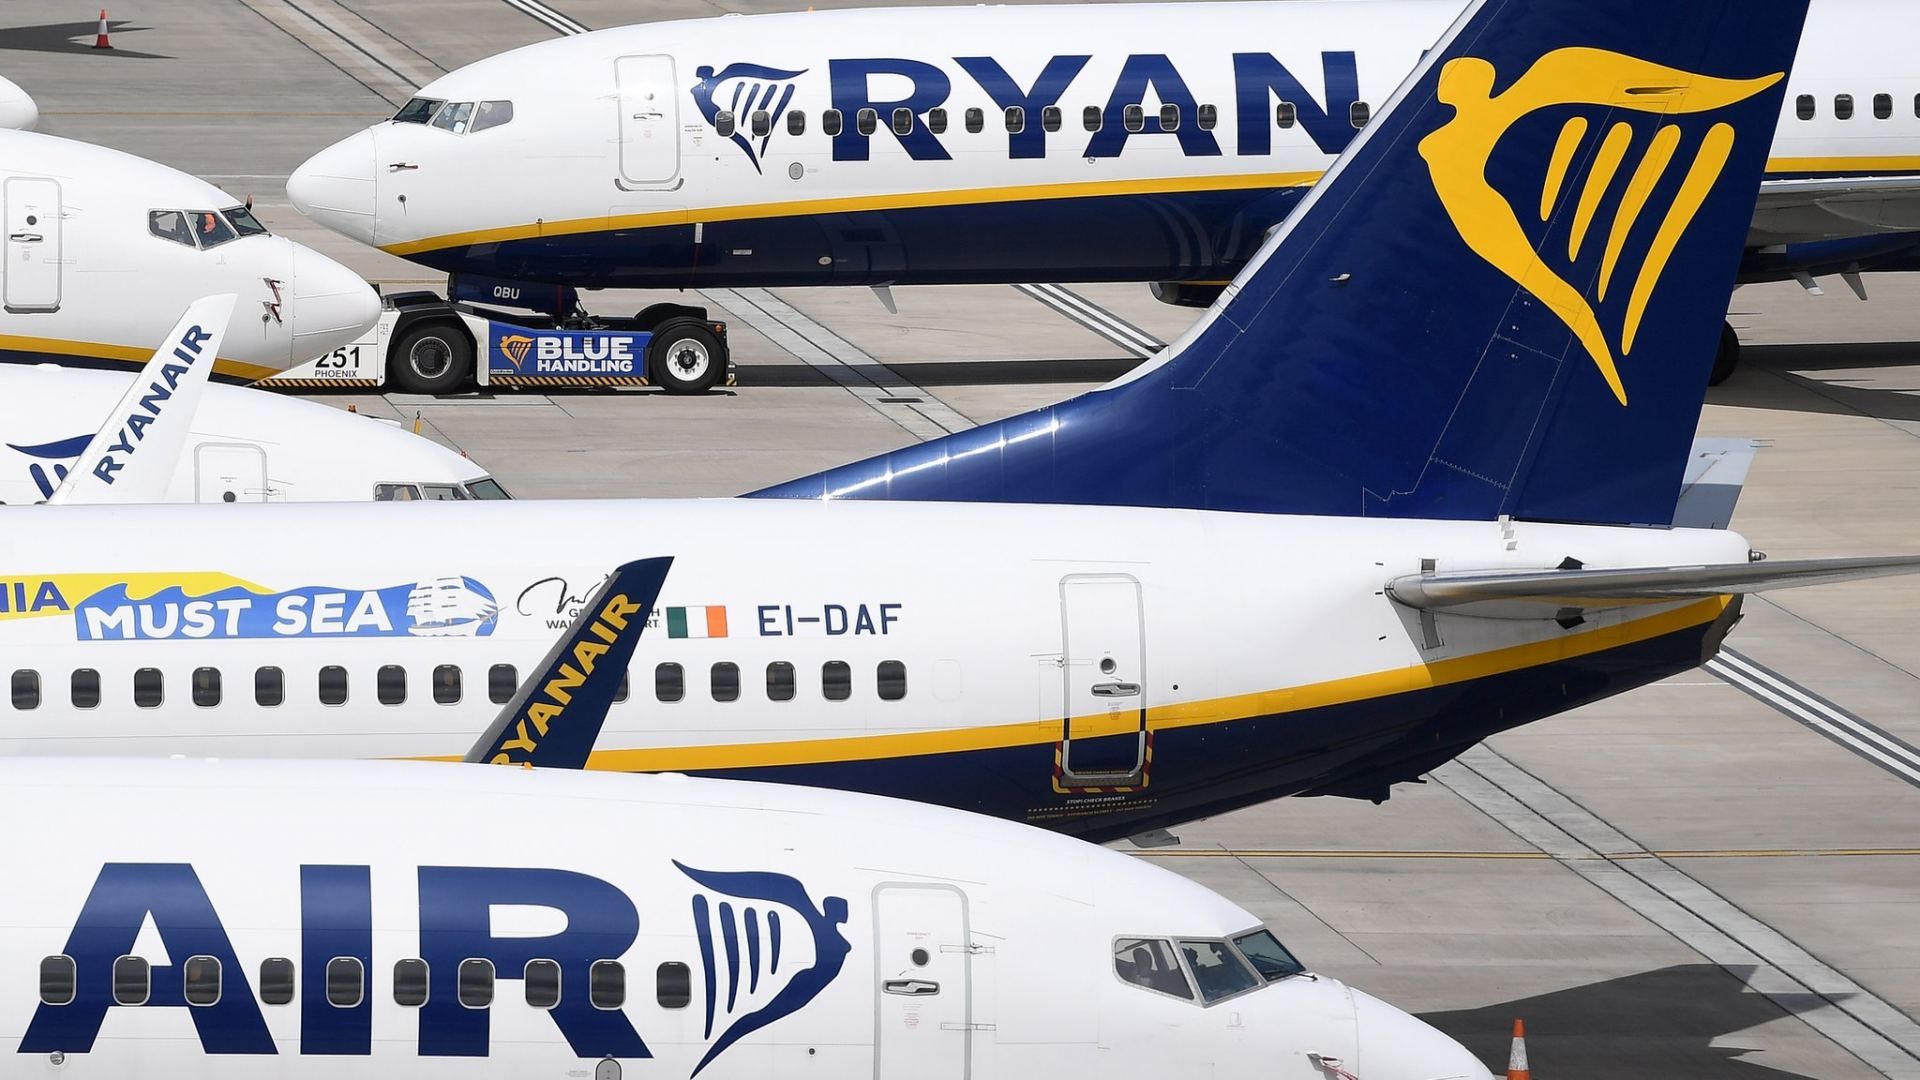 Ryanair unsure of return to pre-COVID profit this year, tops Q1 estimates